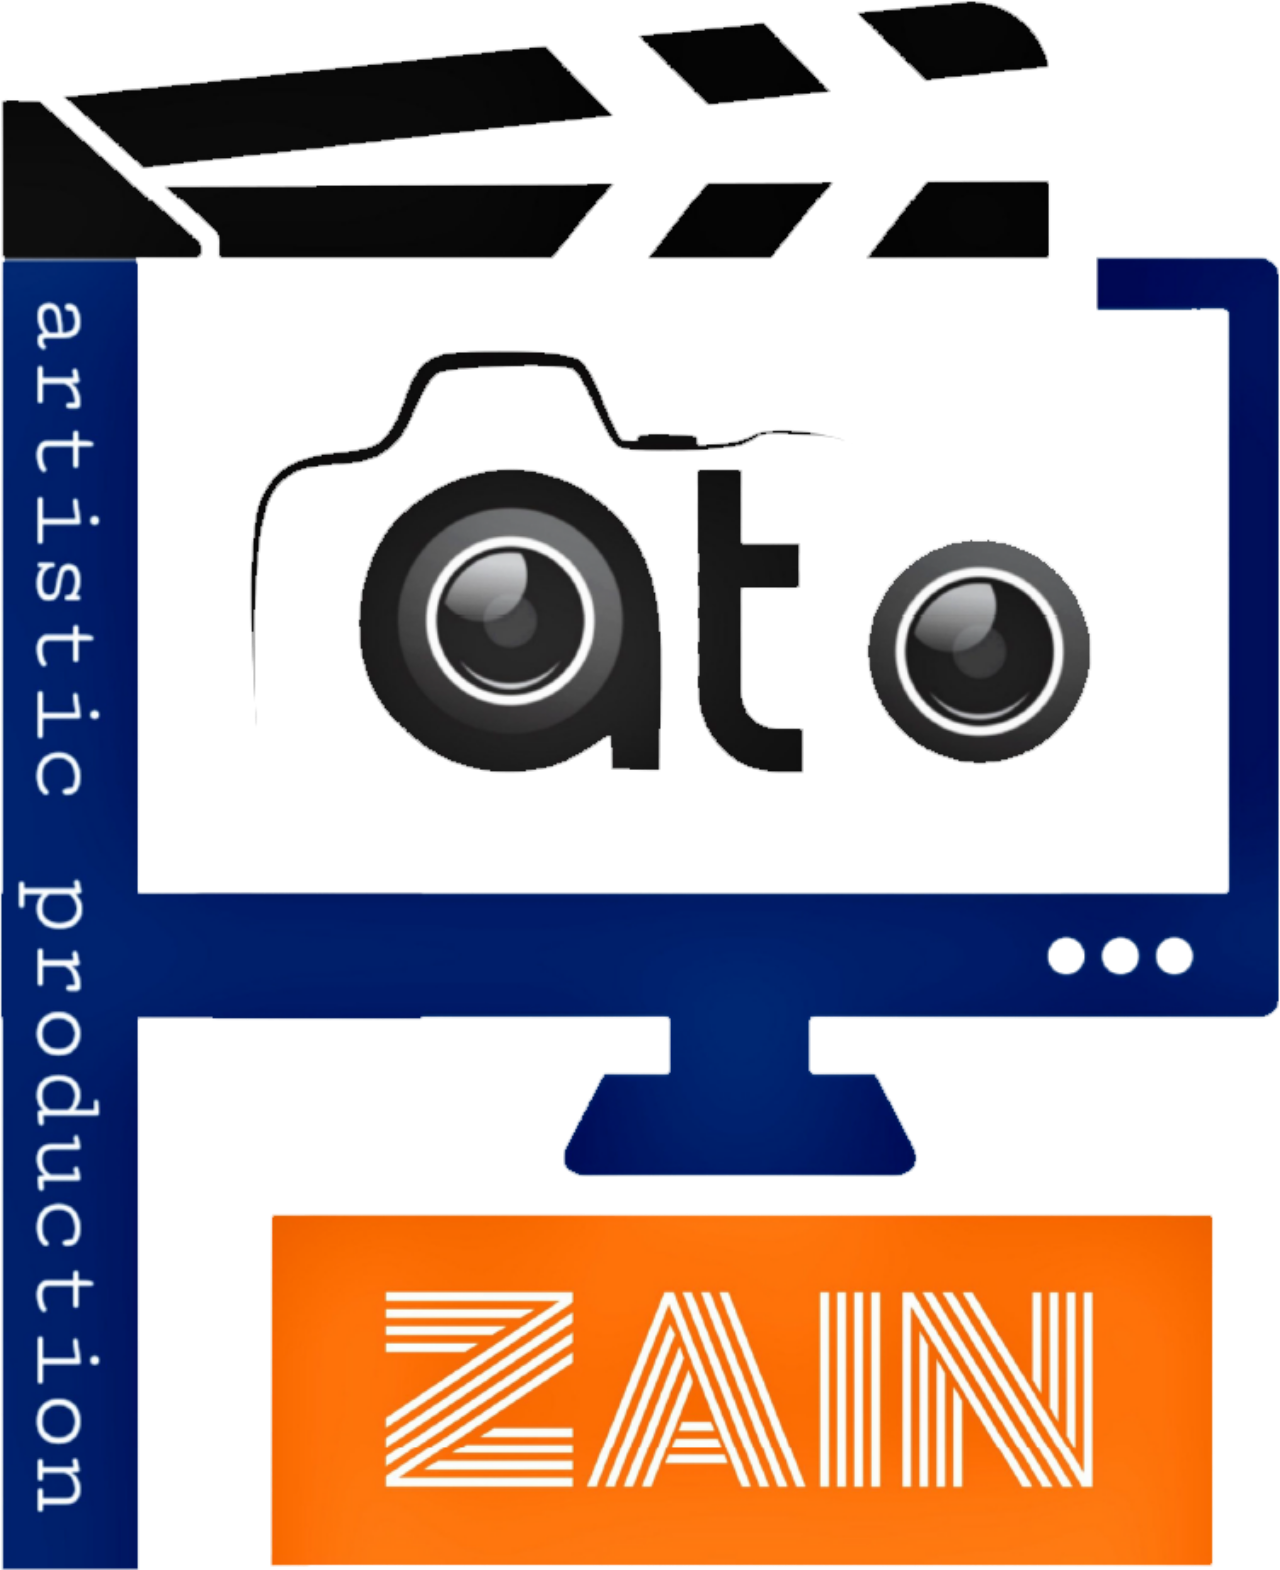 Fatozain artistic production 's logo